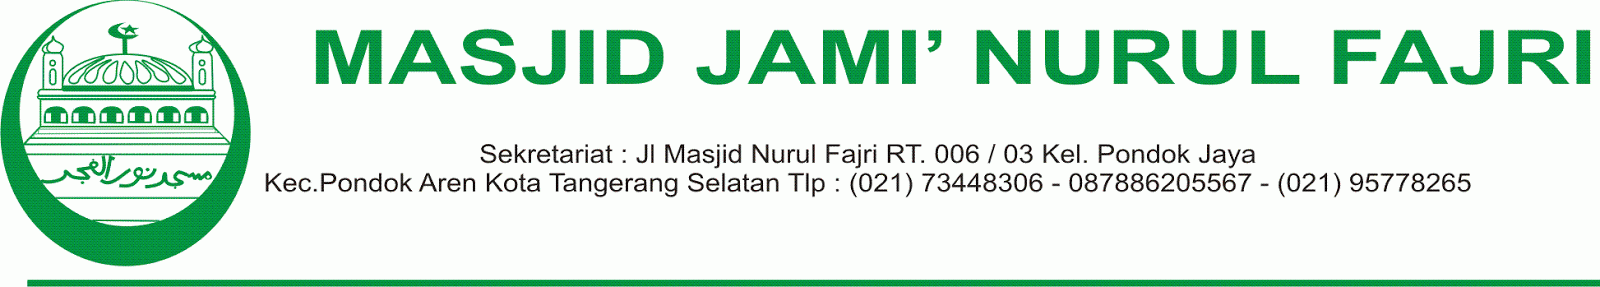 Yayasan Masjid Nurul Fajri Pondok Jaya: logo dan kop surat